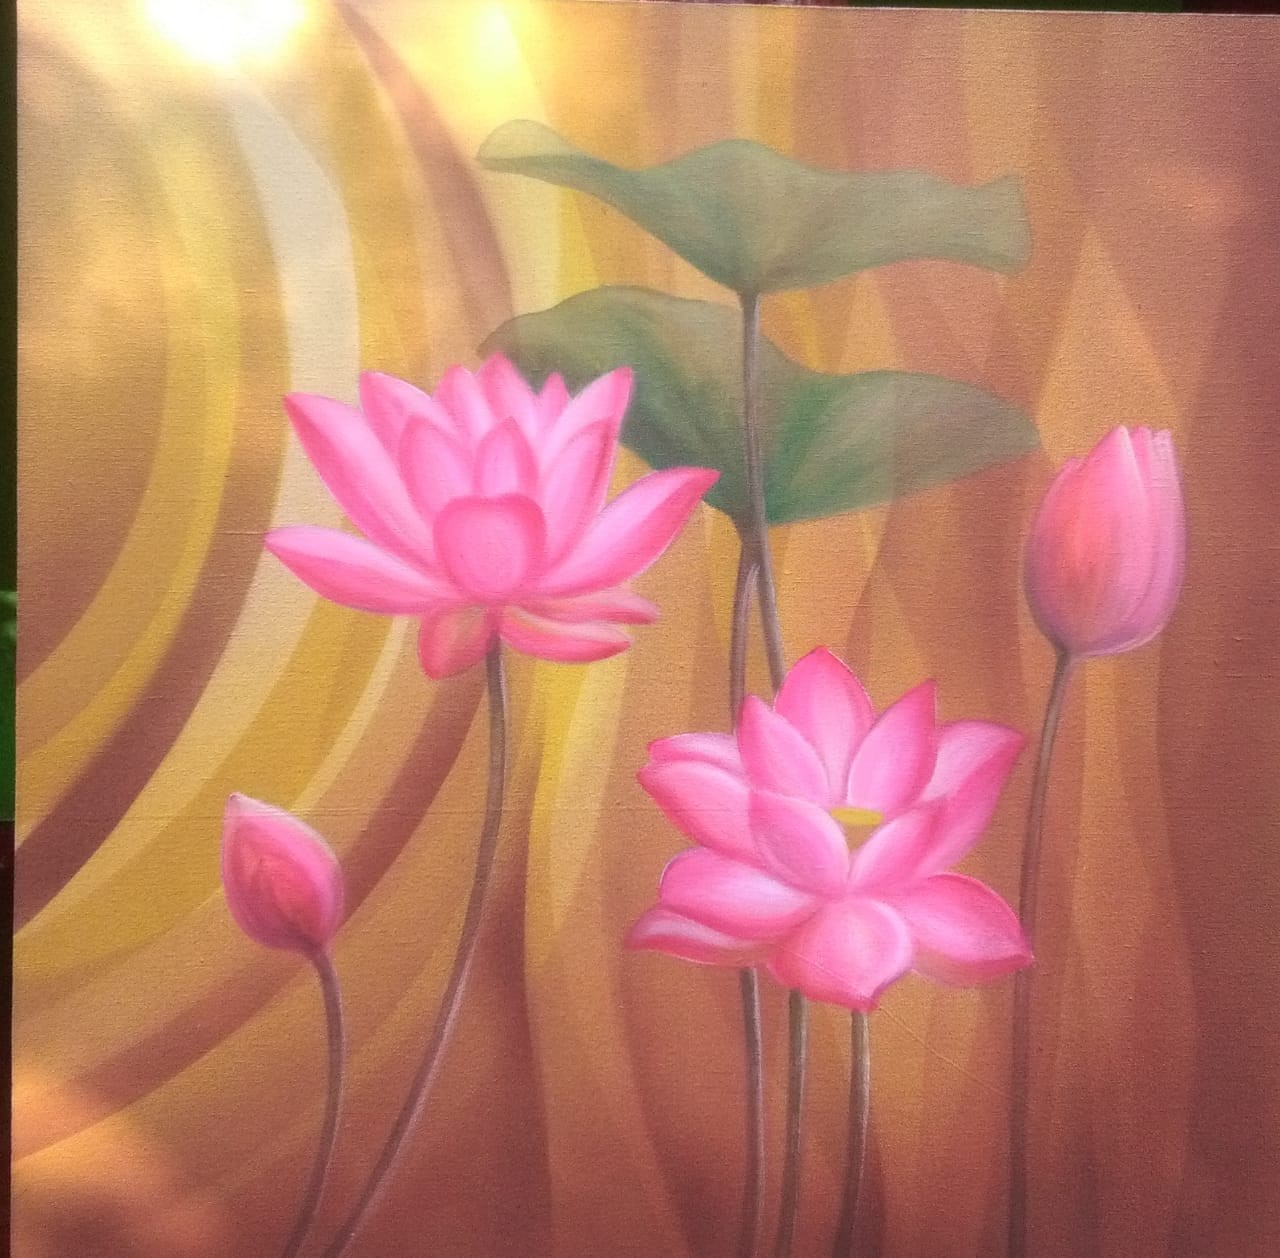 Lotus flower by Sampath Karunarathne